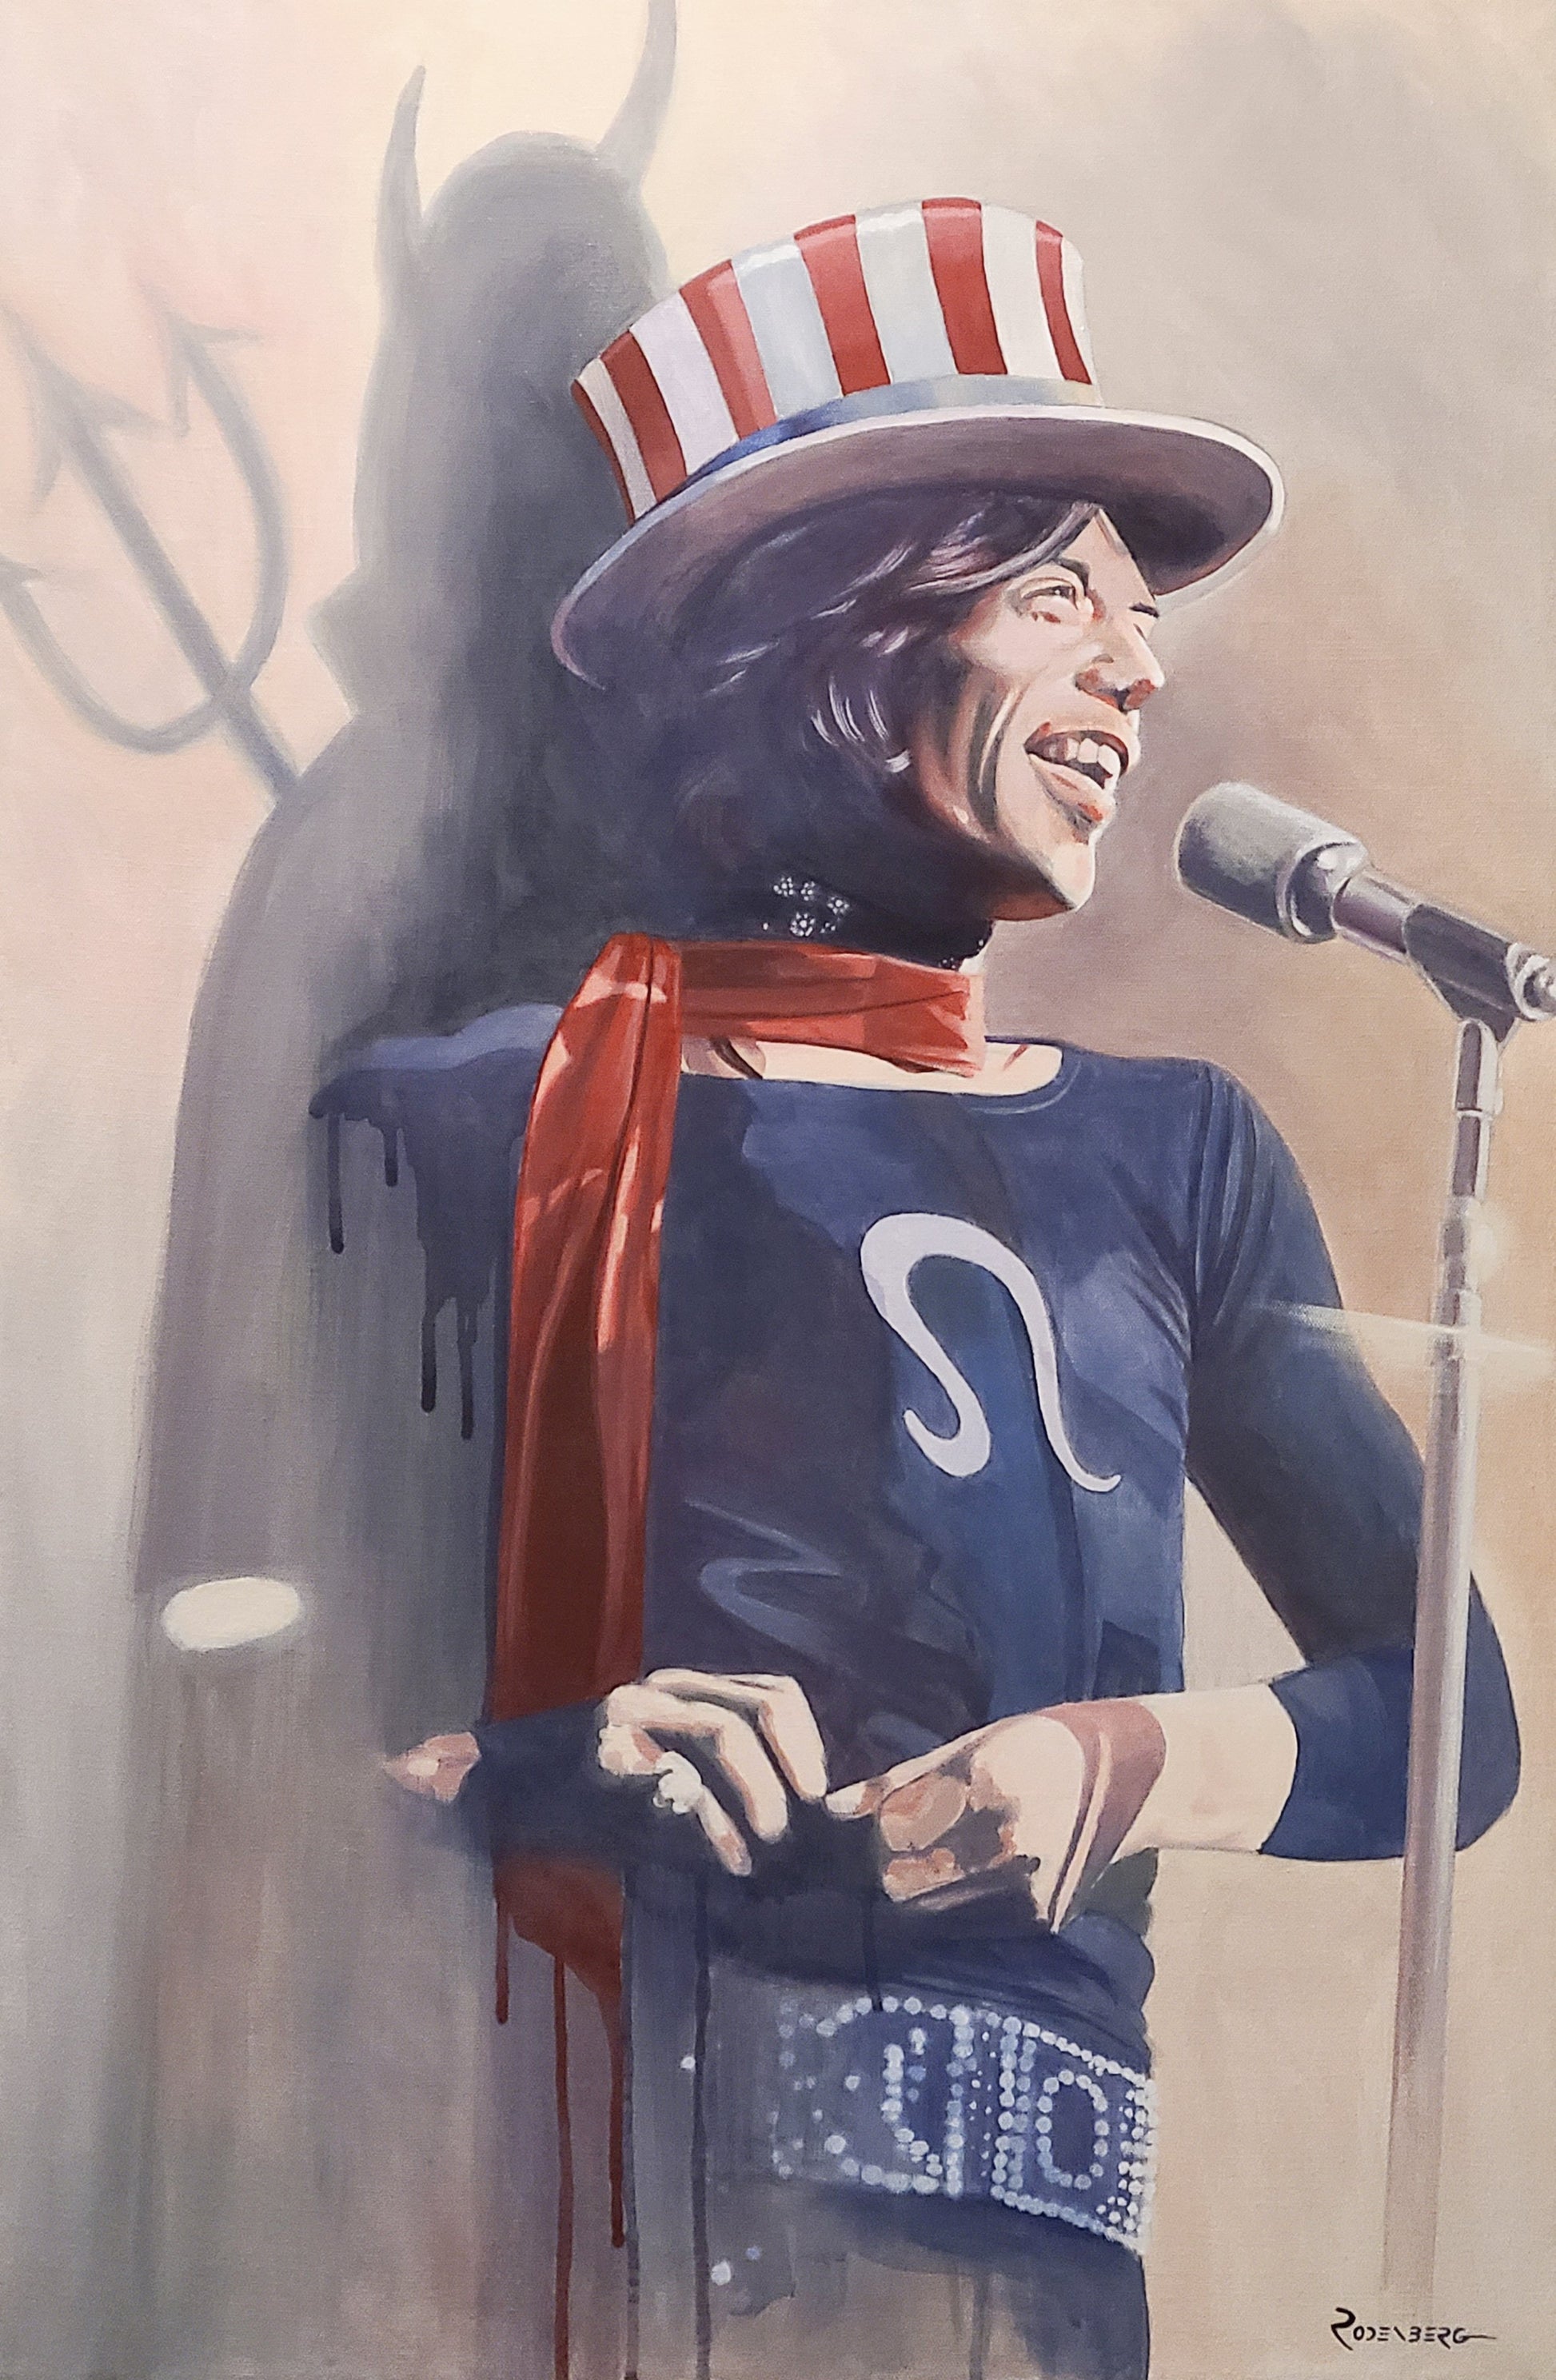 Mick Jagger portrait painting art by Jeff Rodenberg